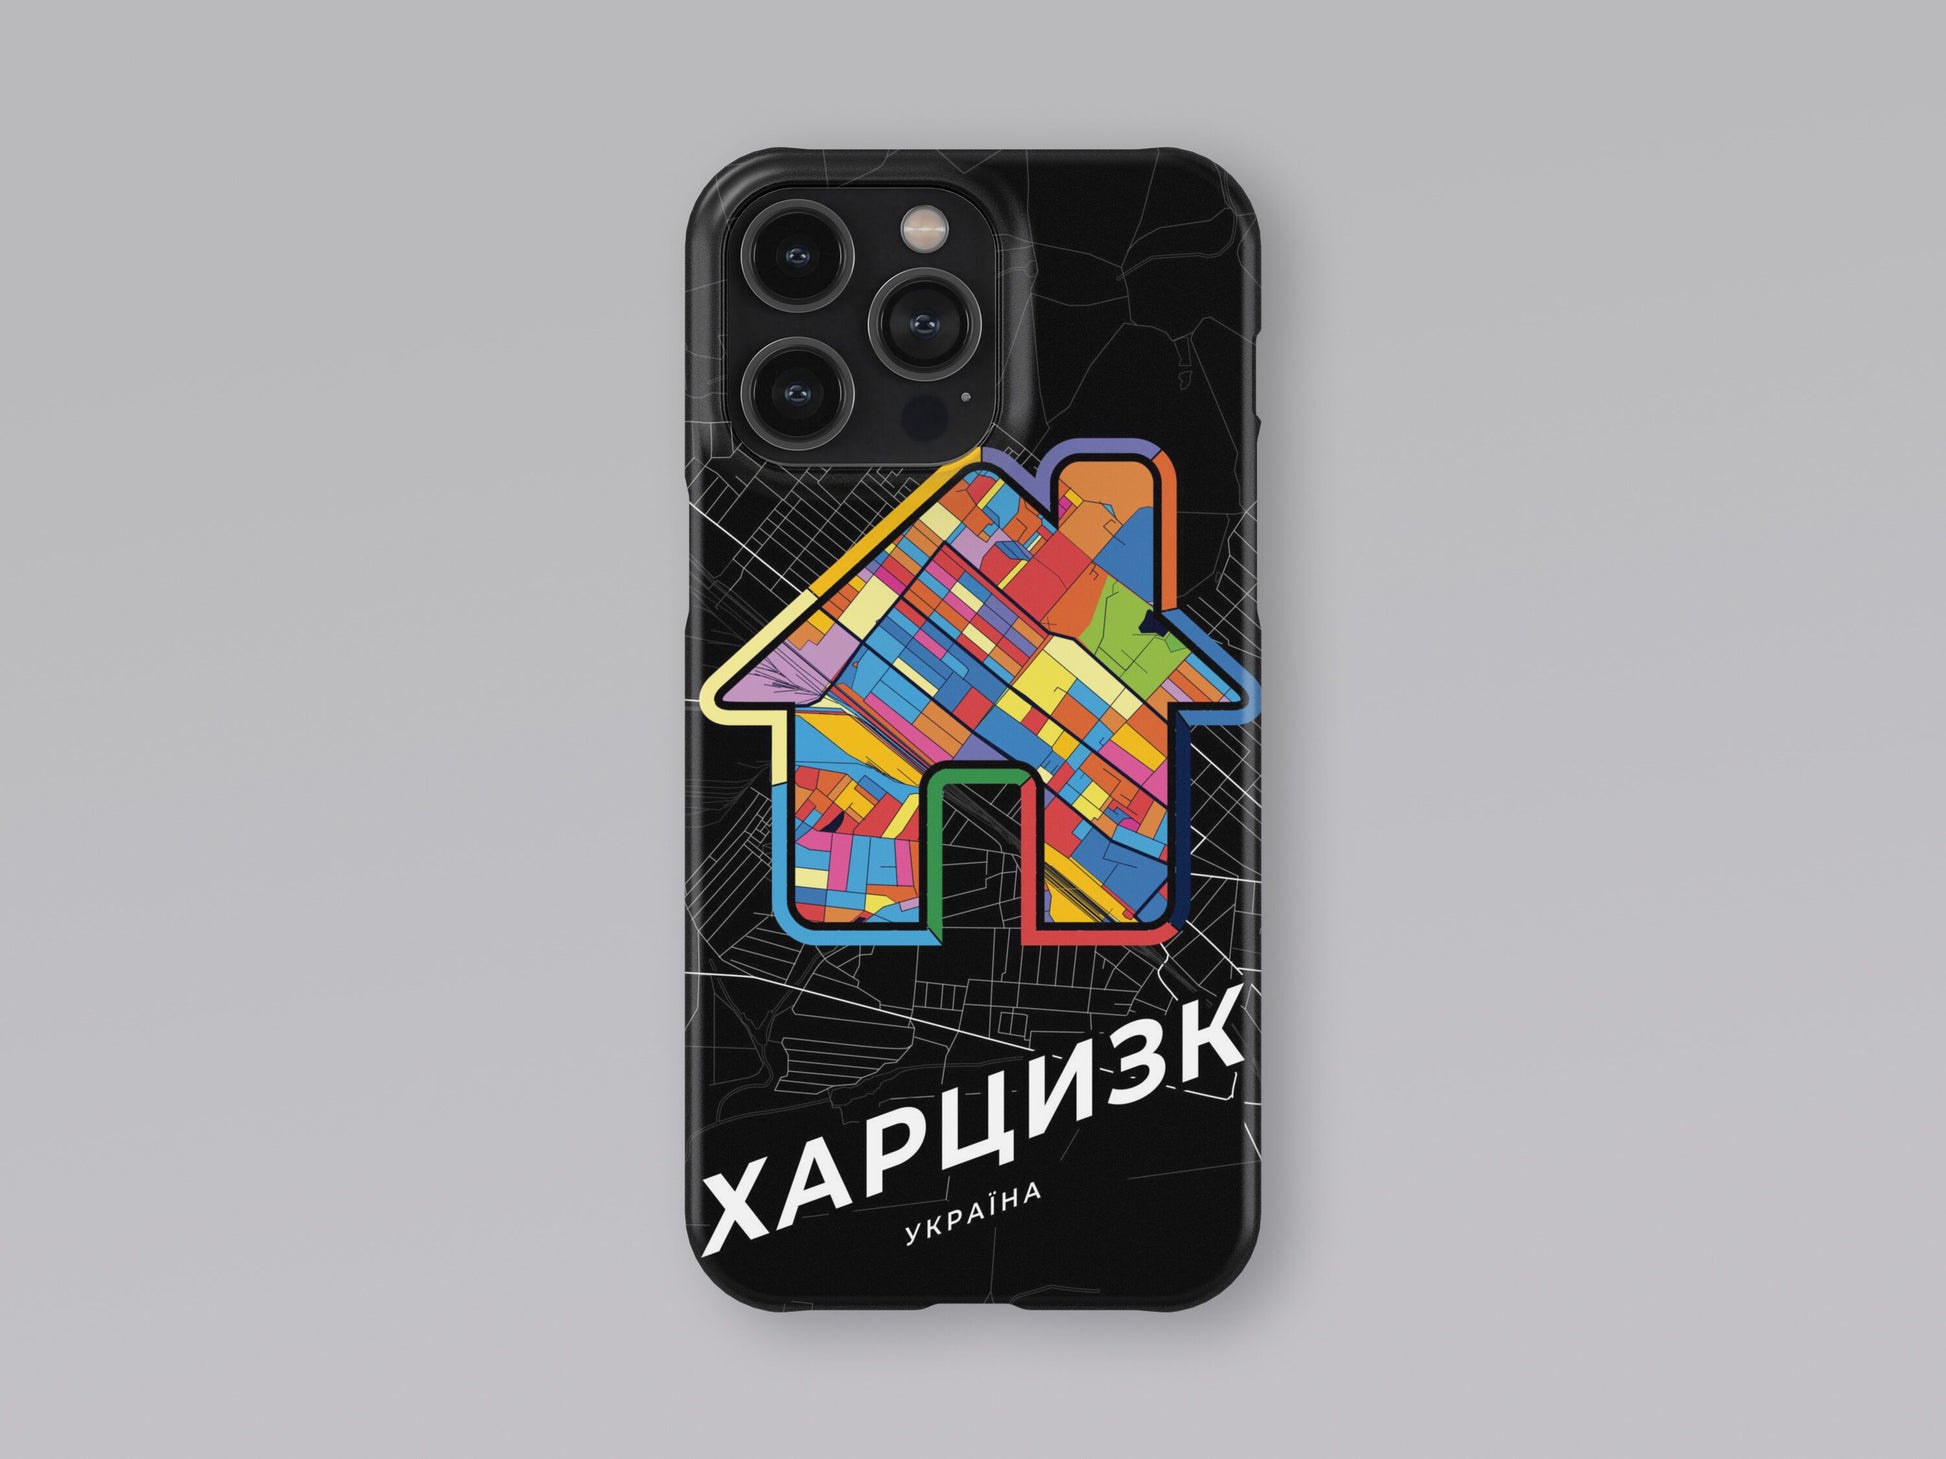 Khartsyzk Ukraine slim phone case with colorful icon. Birthday, wedding or housewarming gift. Couple match cases. 3